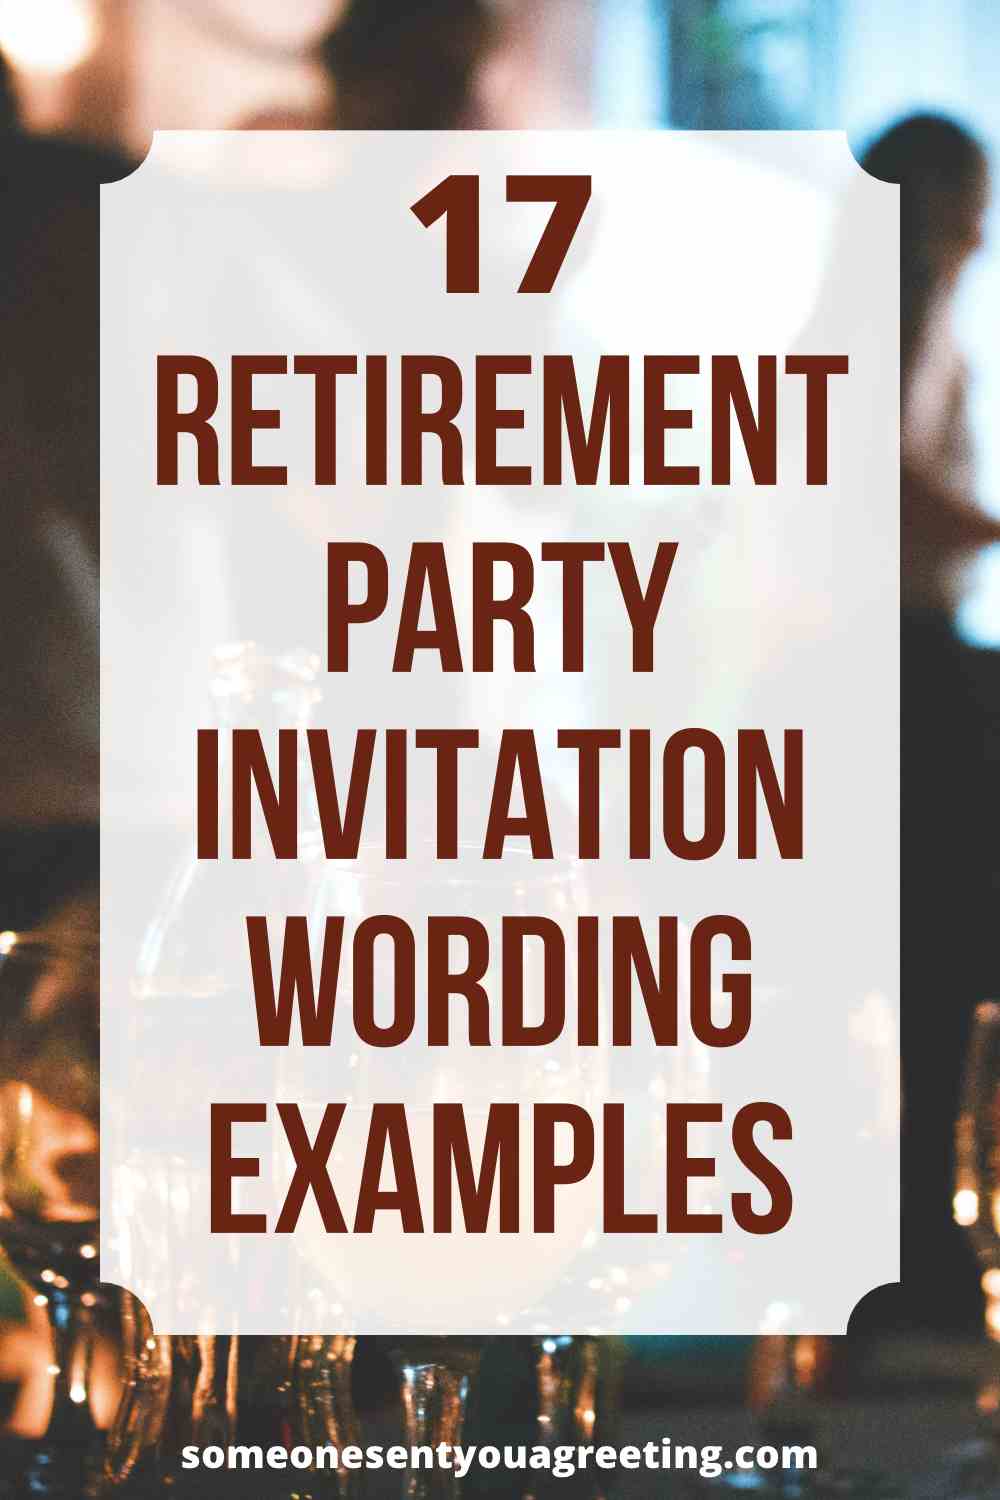 retirement party invitation wording examples